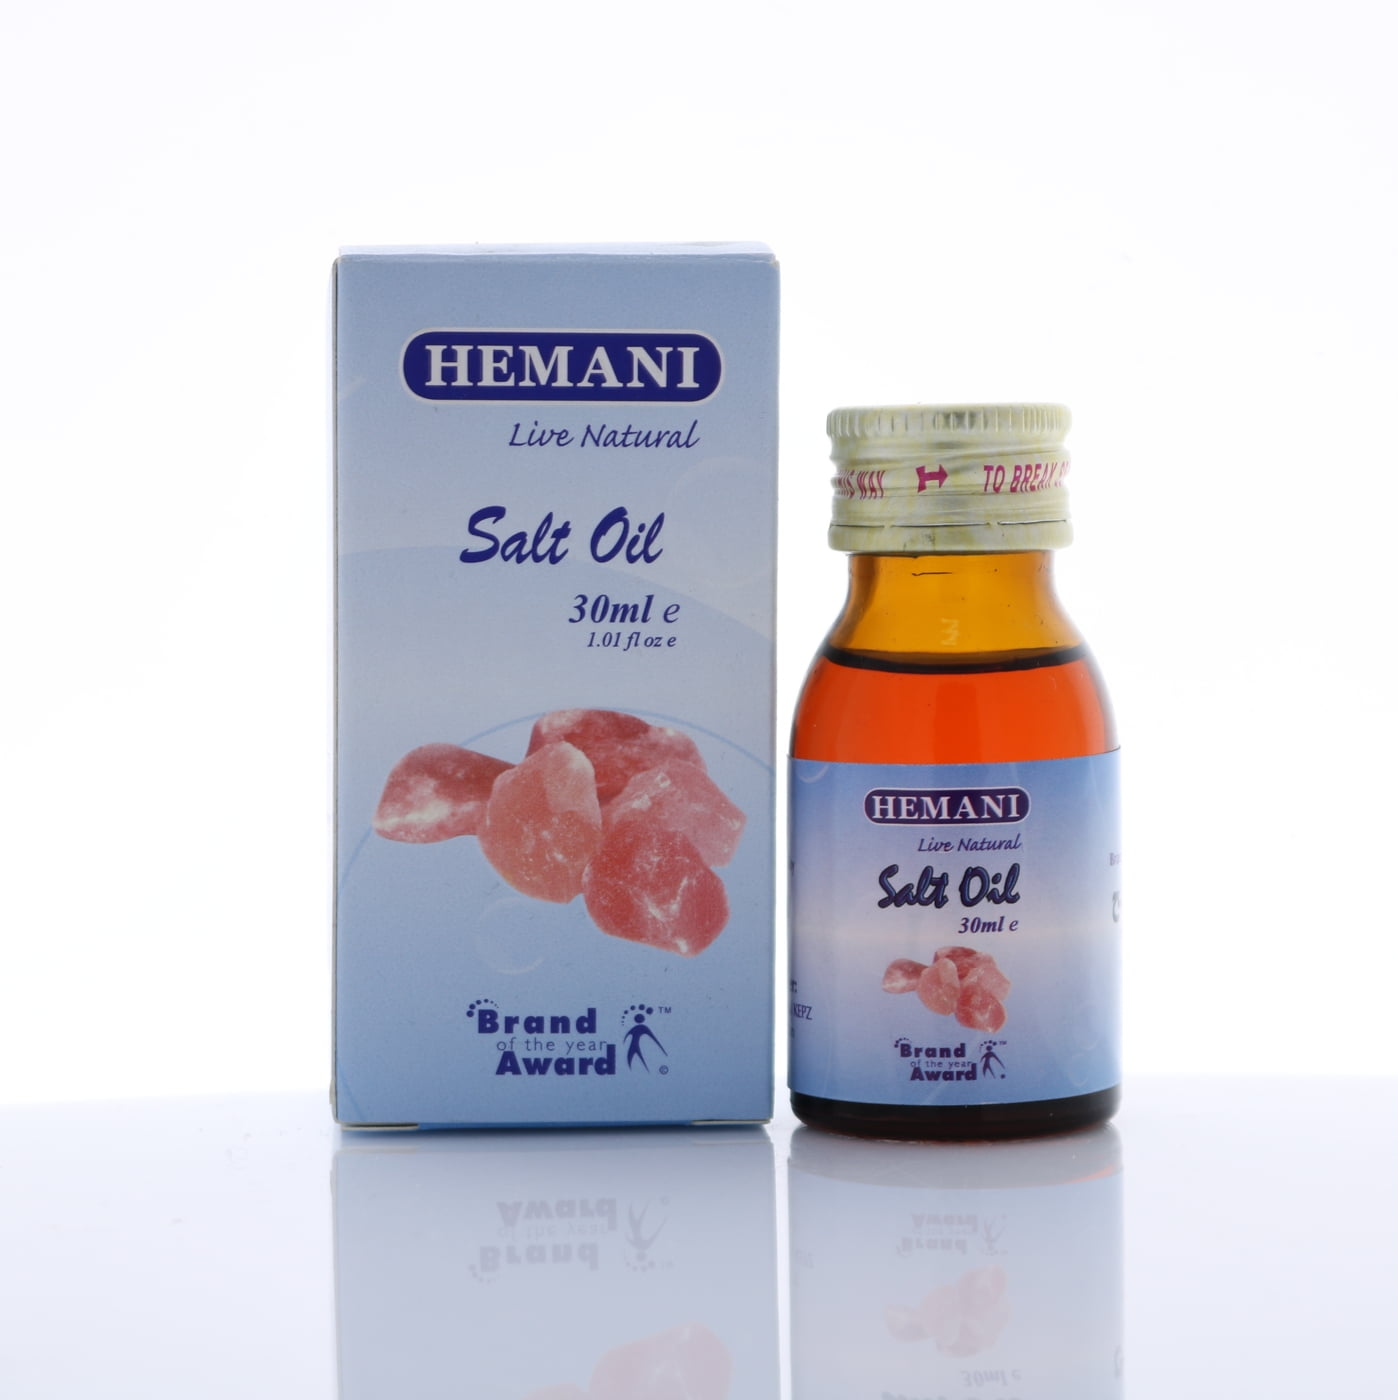 HEMANI Sweet Violet Oil 30mL (1 OZ) - Edible Food Grade Oil - Internal &  External Use 